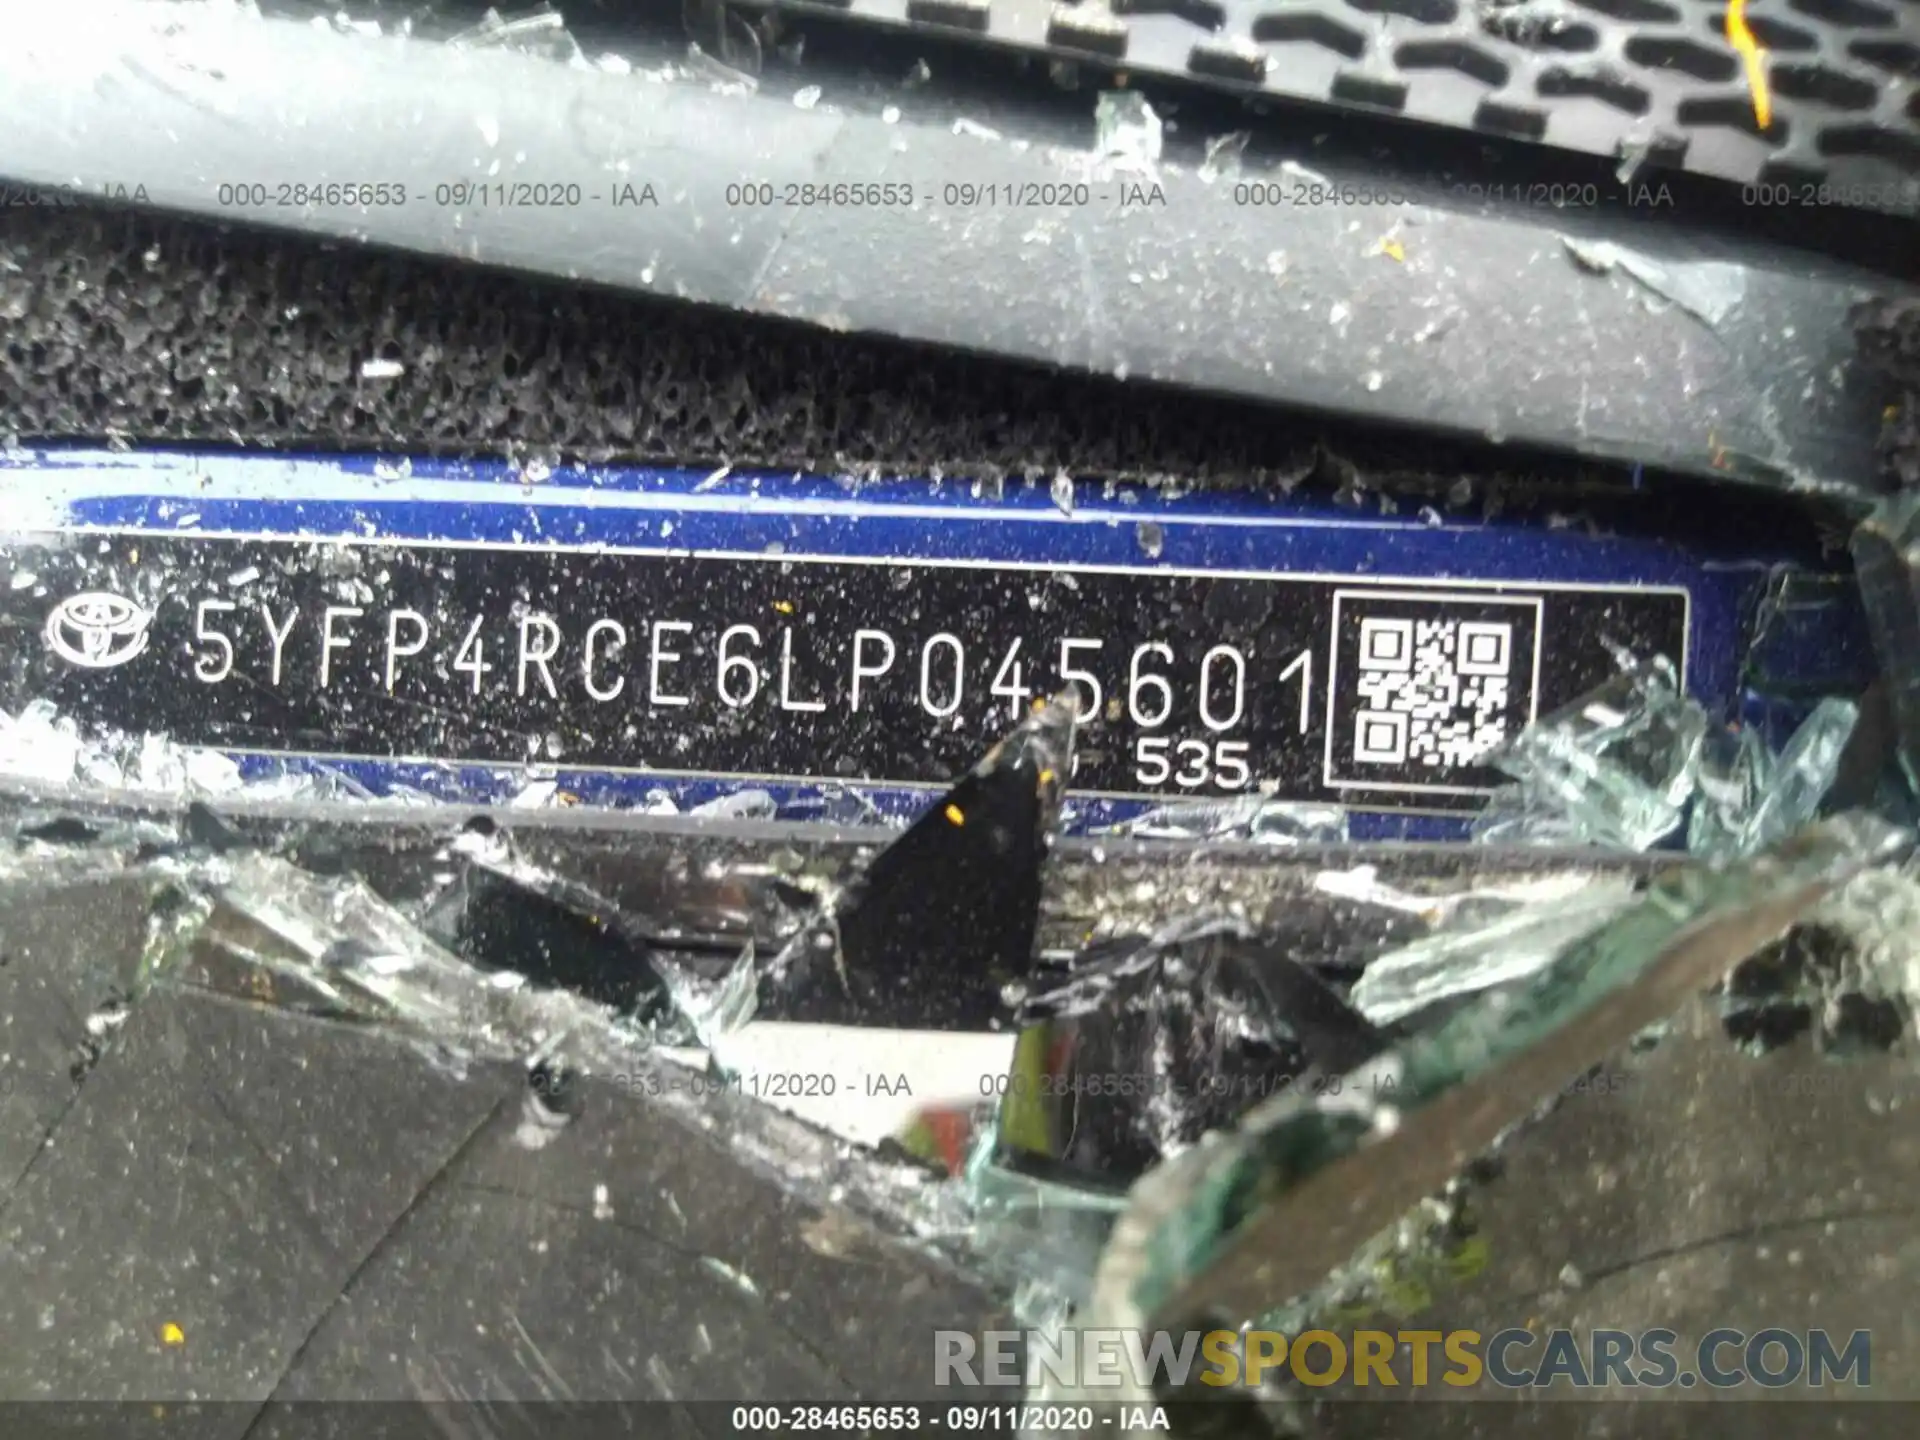 8 Photograph of a damaged car 5YFP4RCE6LP045601 TOYOTA COROLLA 2020